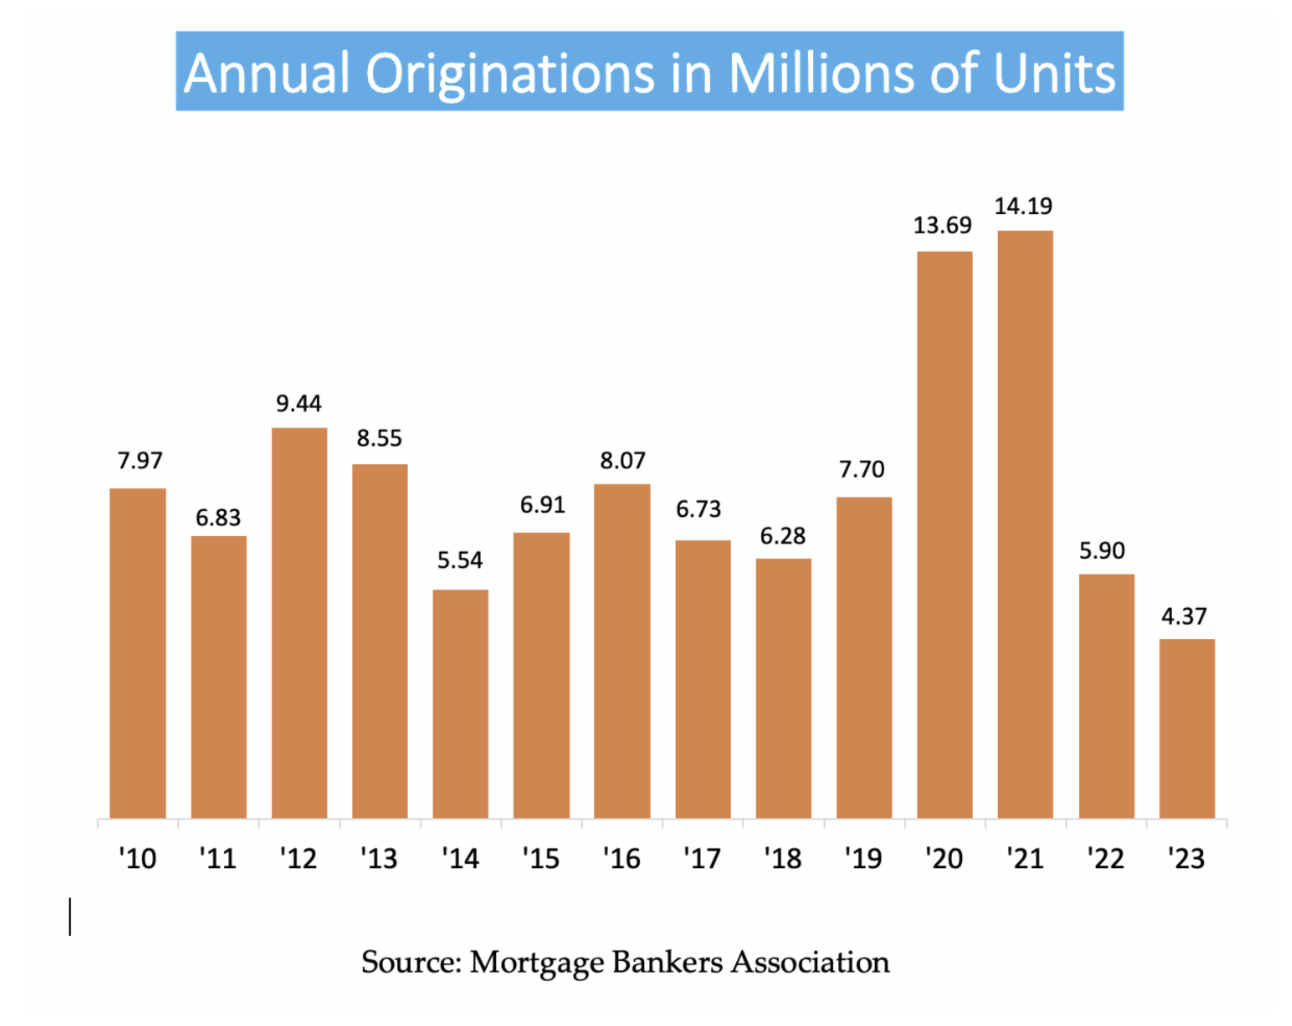 Annual Originations in Millions of Units